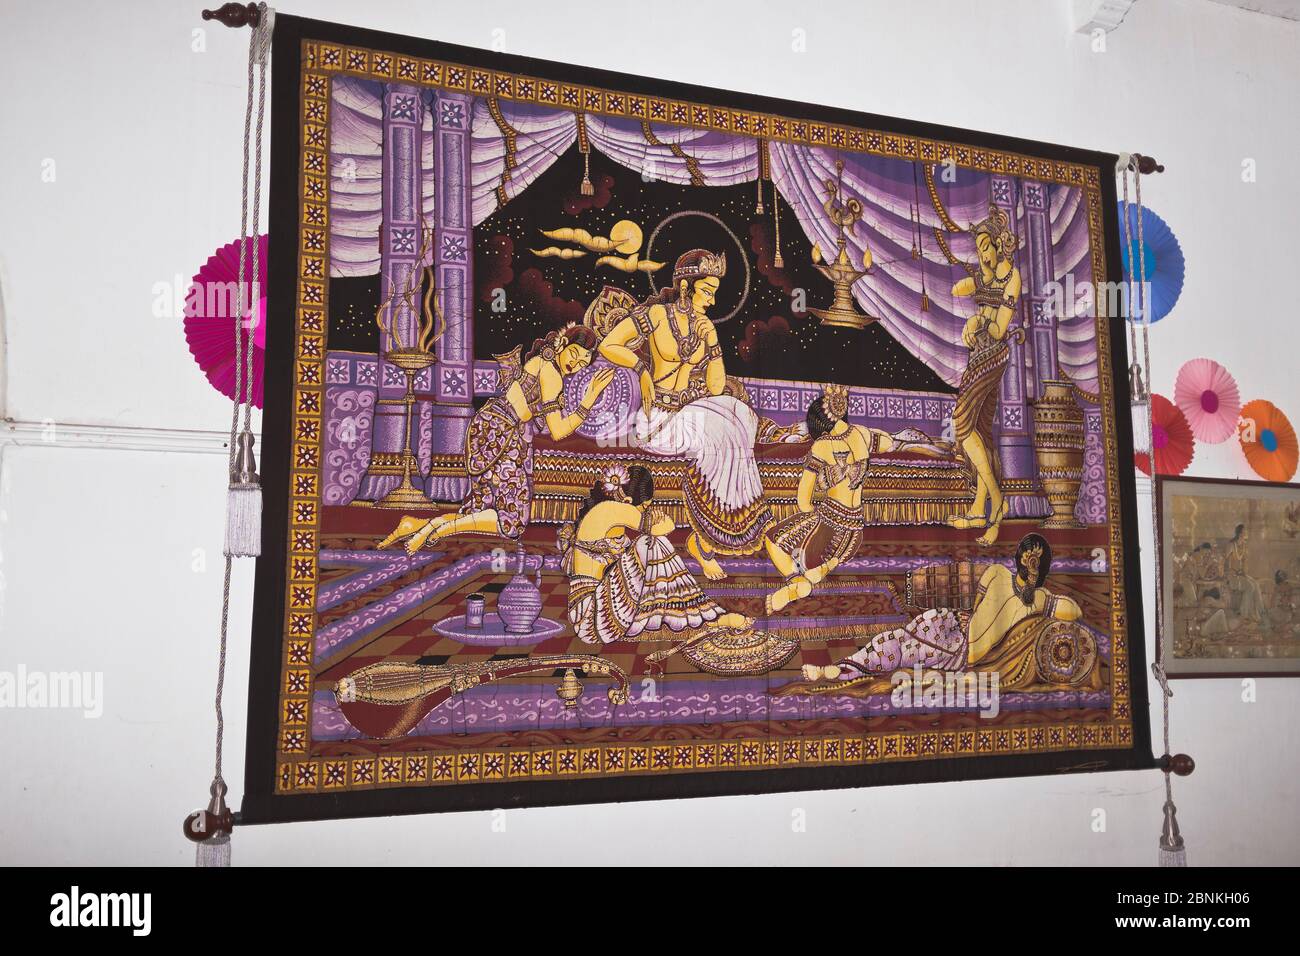 dh Batik shop GALLE SRI LANKA Award winning Batiks wall hanging artwork display fabric art pattern Stock Photo